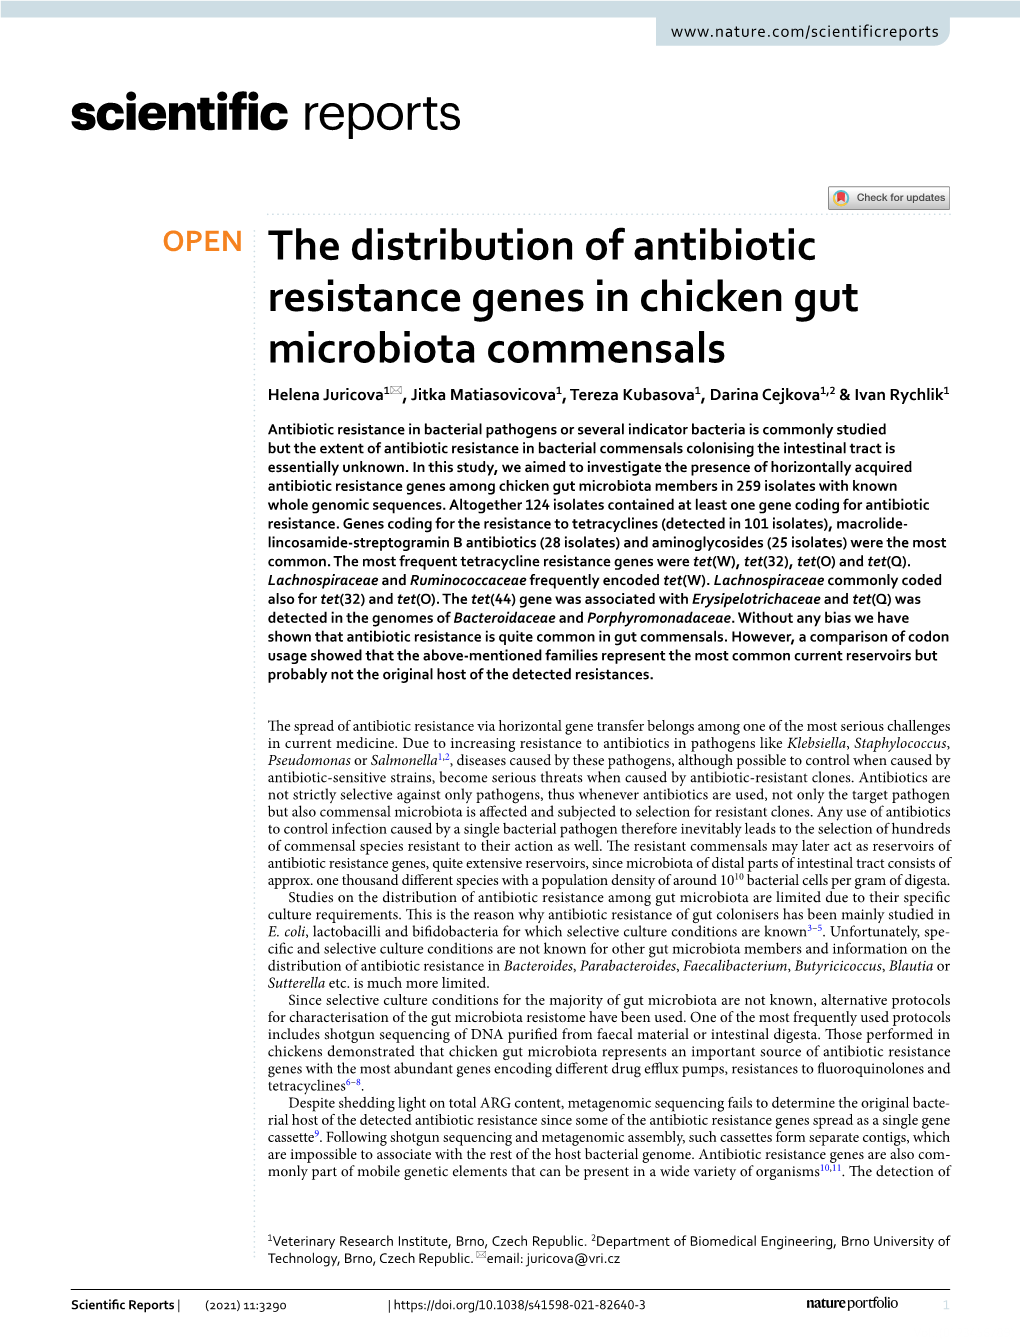 The Distribution of Antibiotic Resistance Genes in Chicken Gut Microbiota